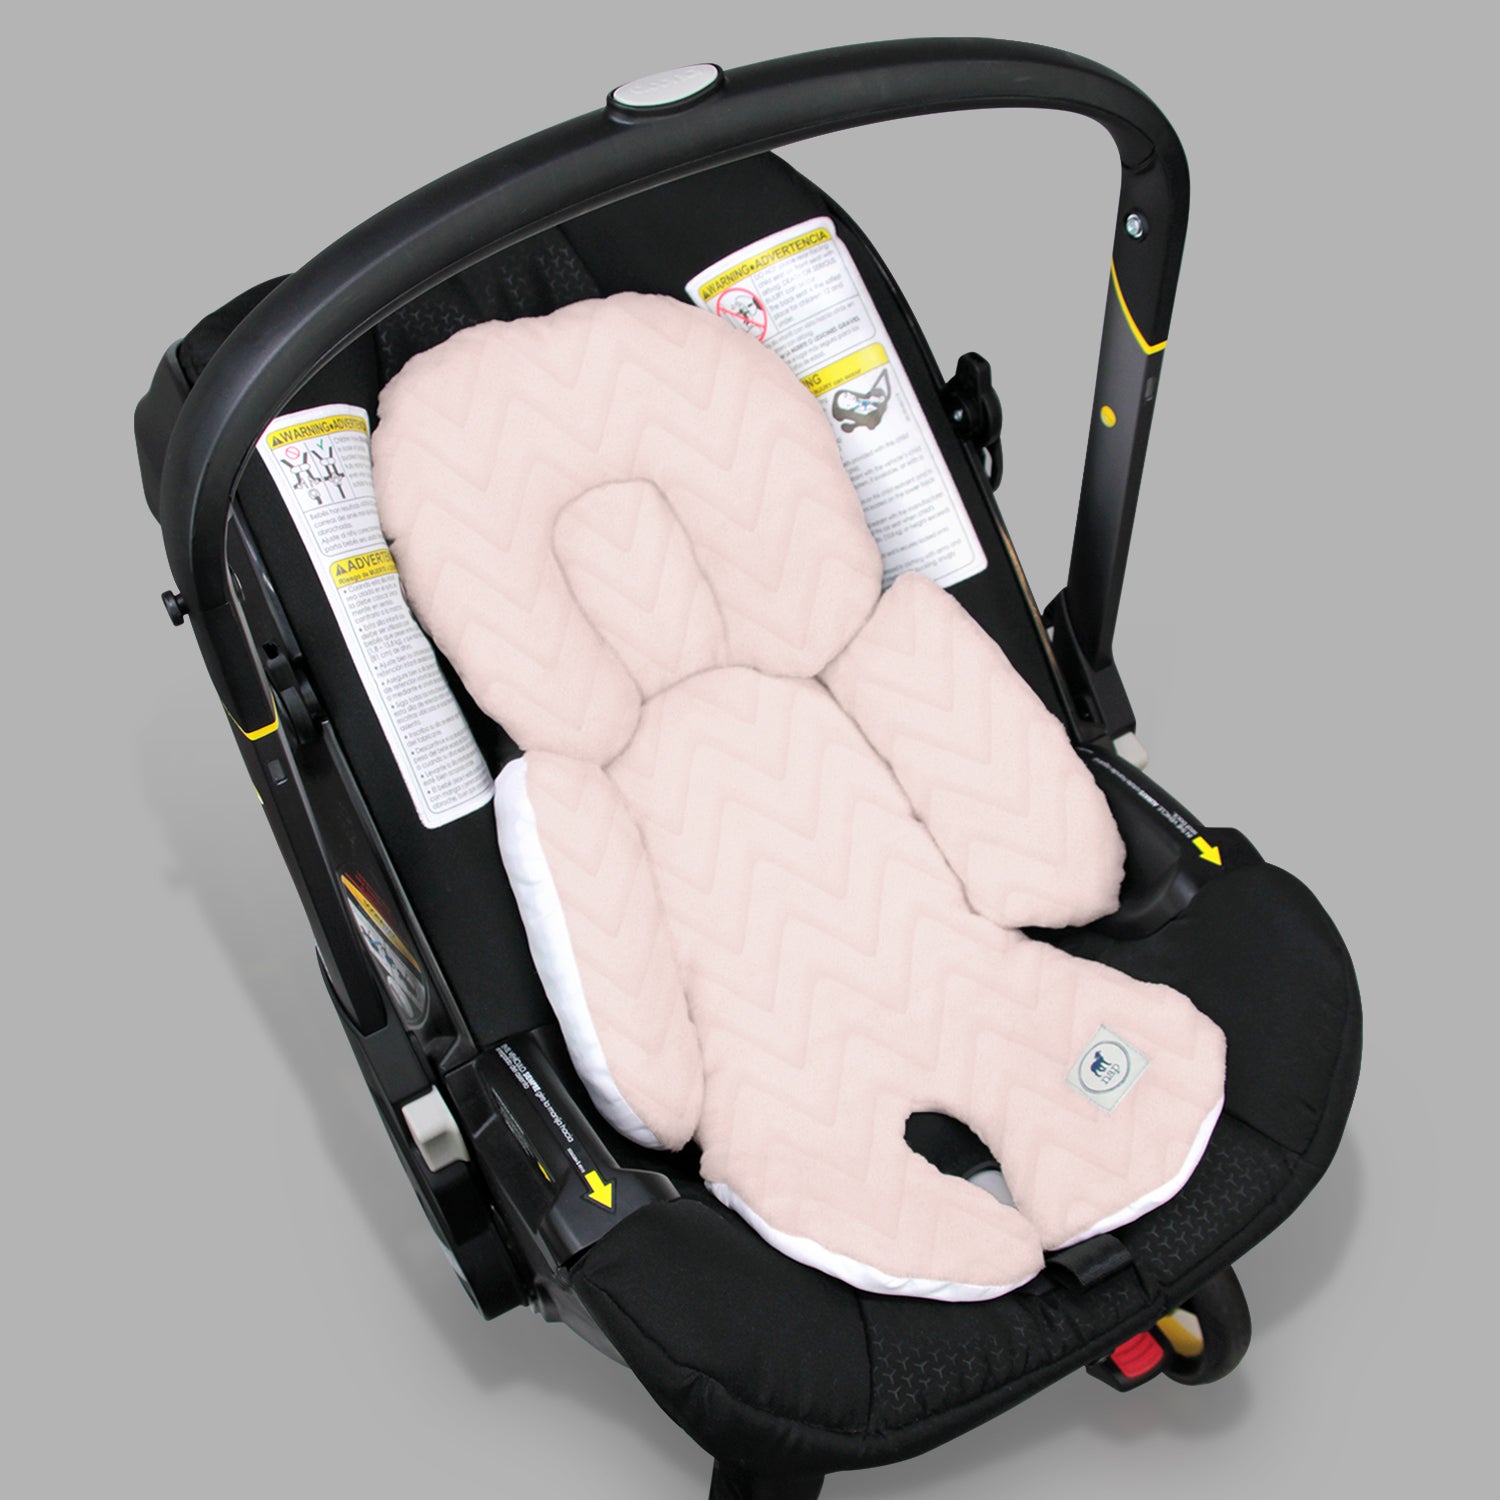 Cojín Posicionador para Porta Bebé Beige – Nap